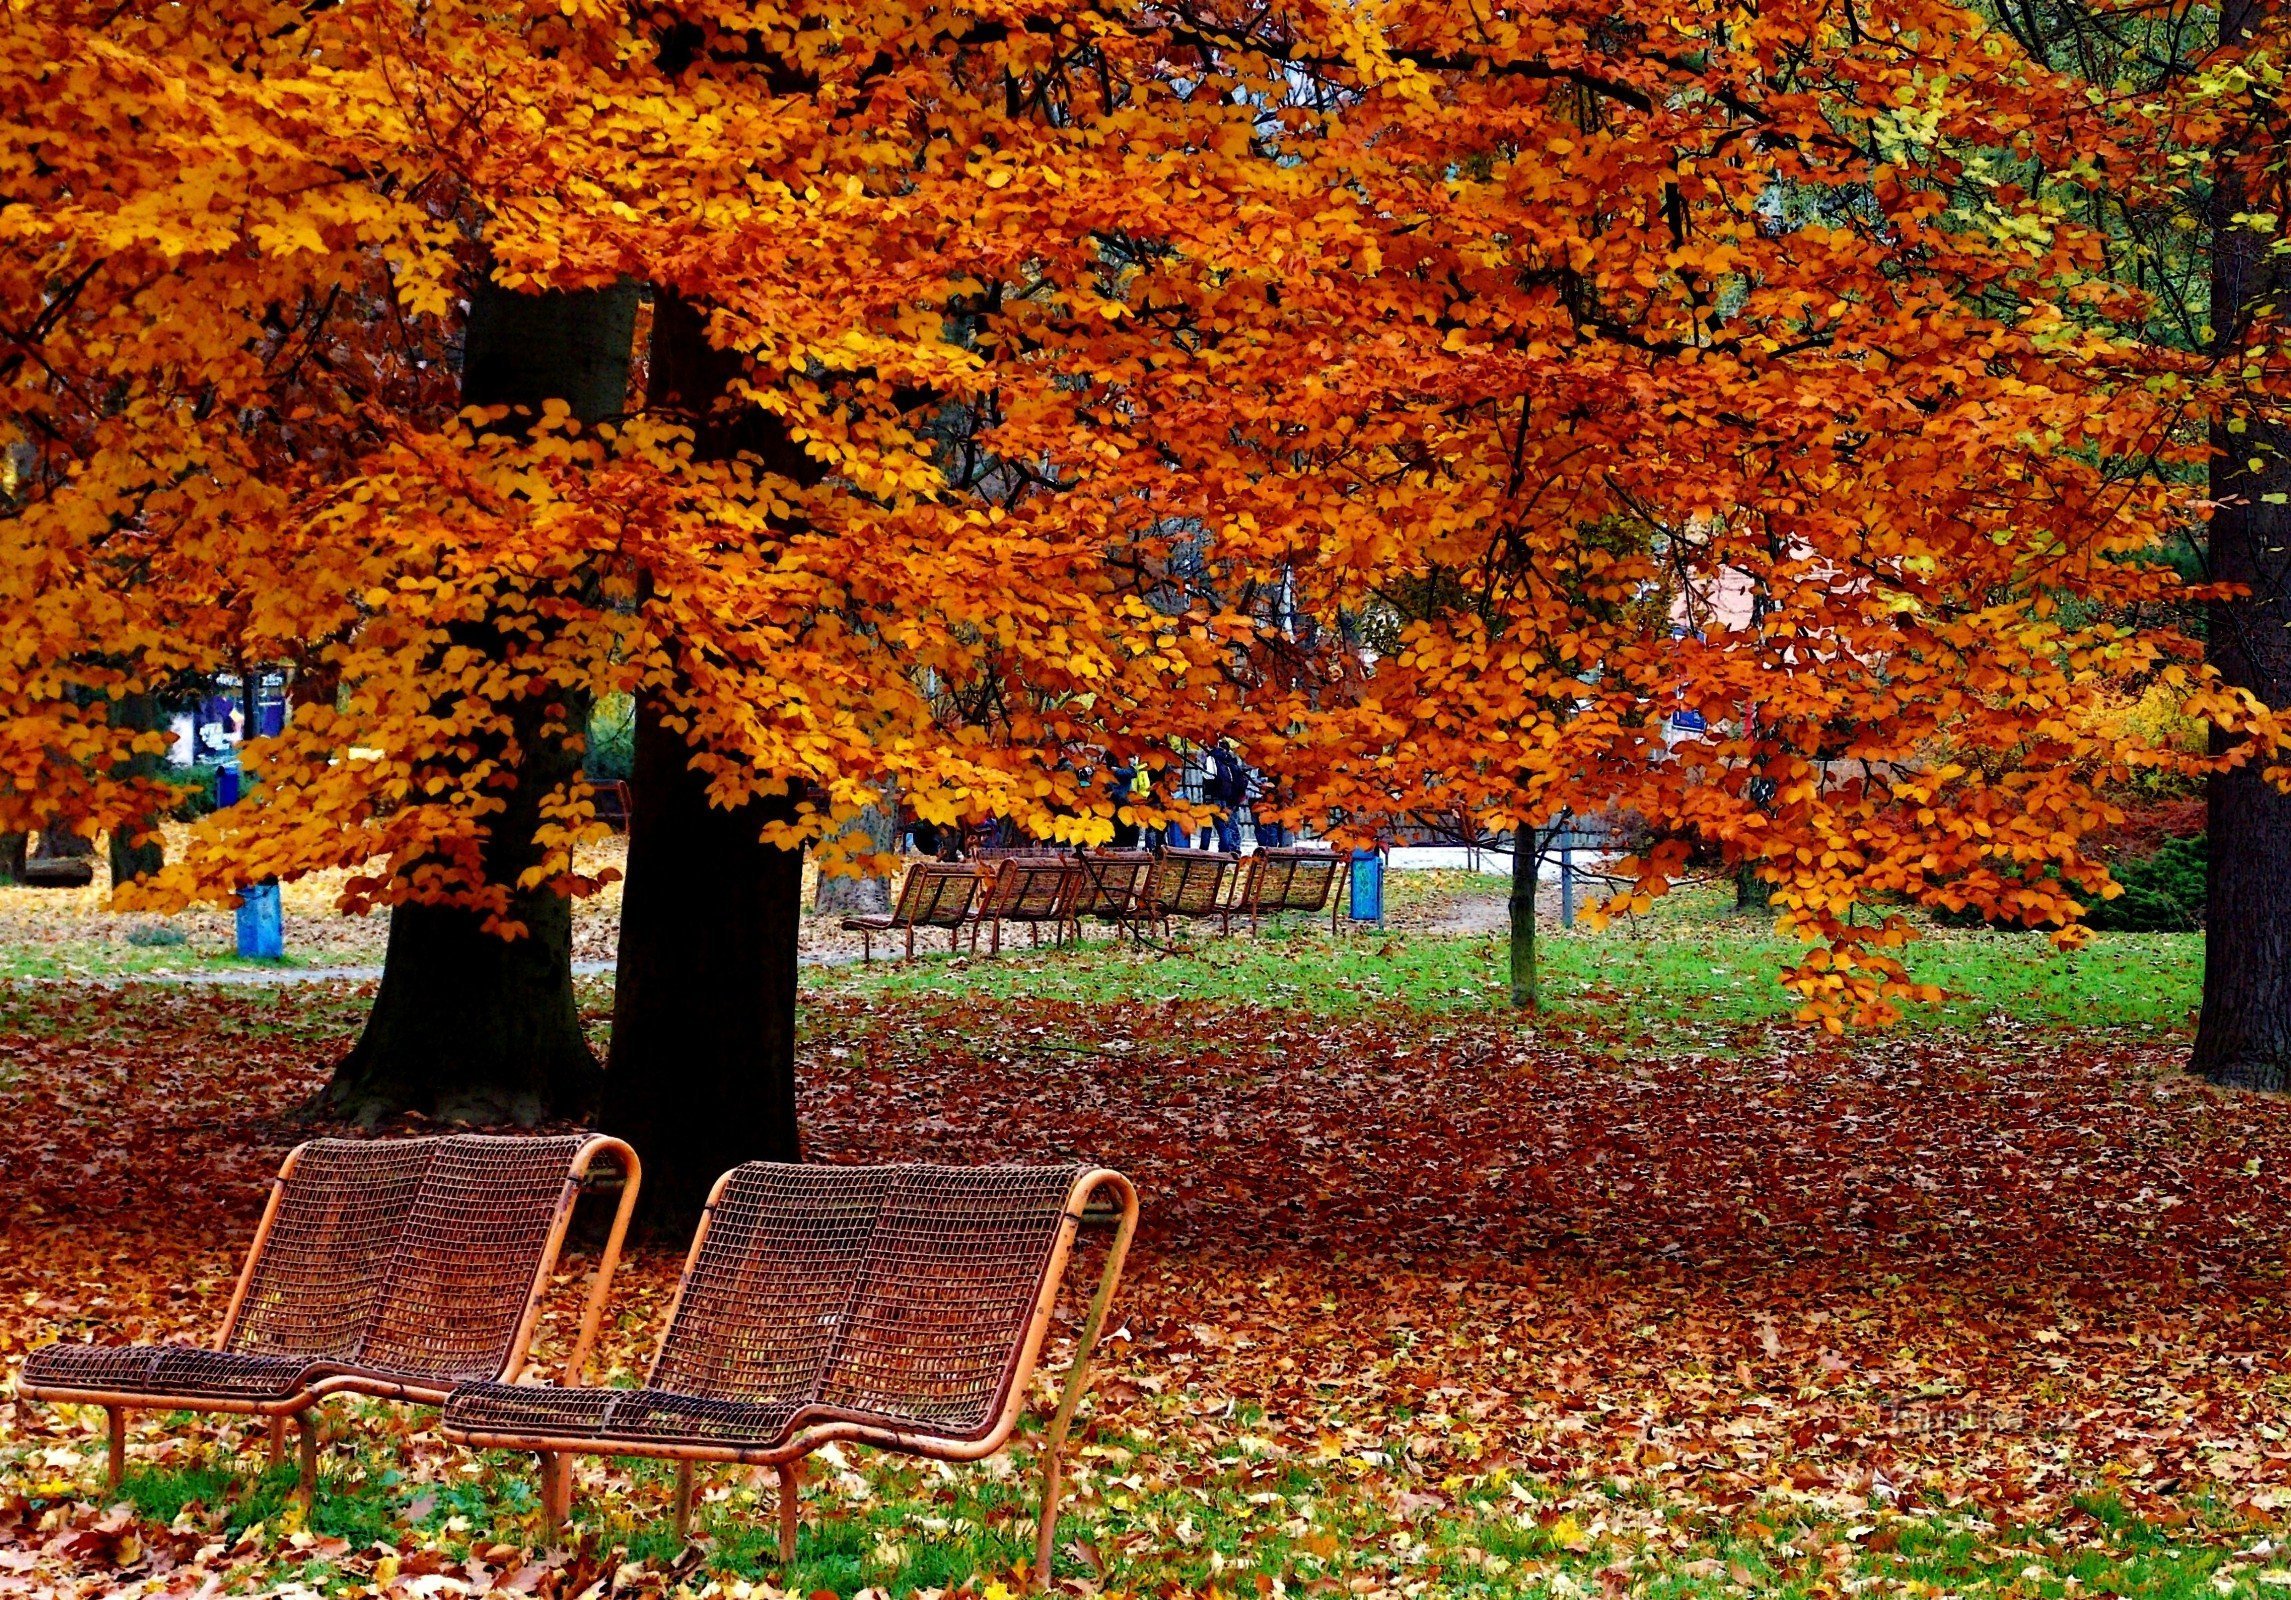 An autumn walk in the Comenius Park in Zlín